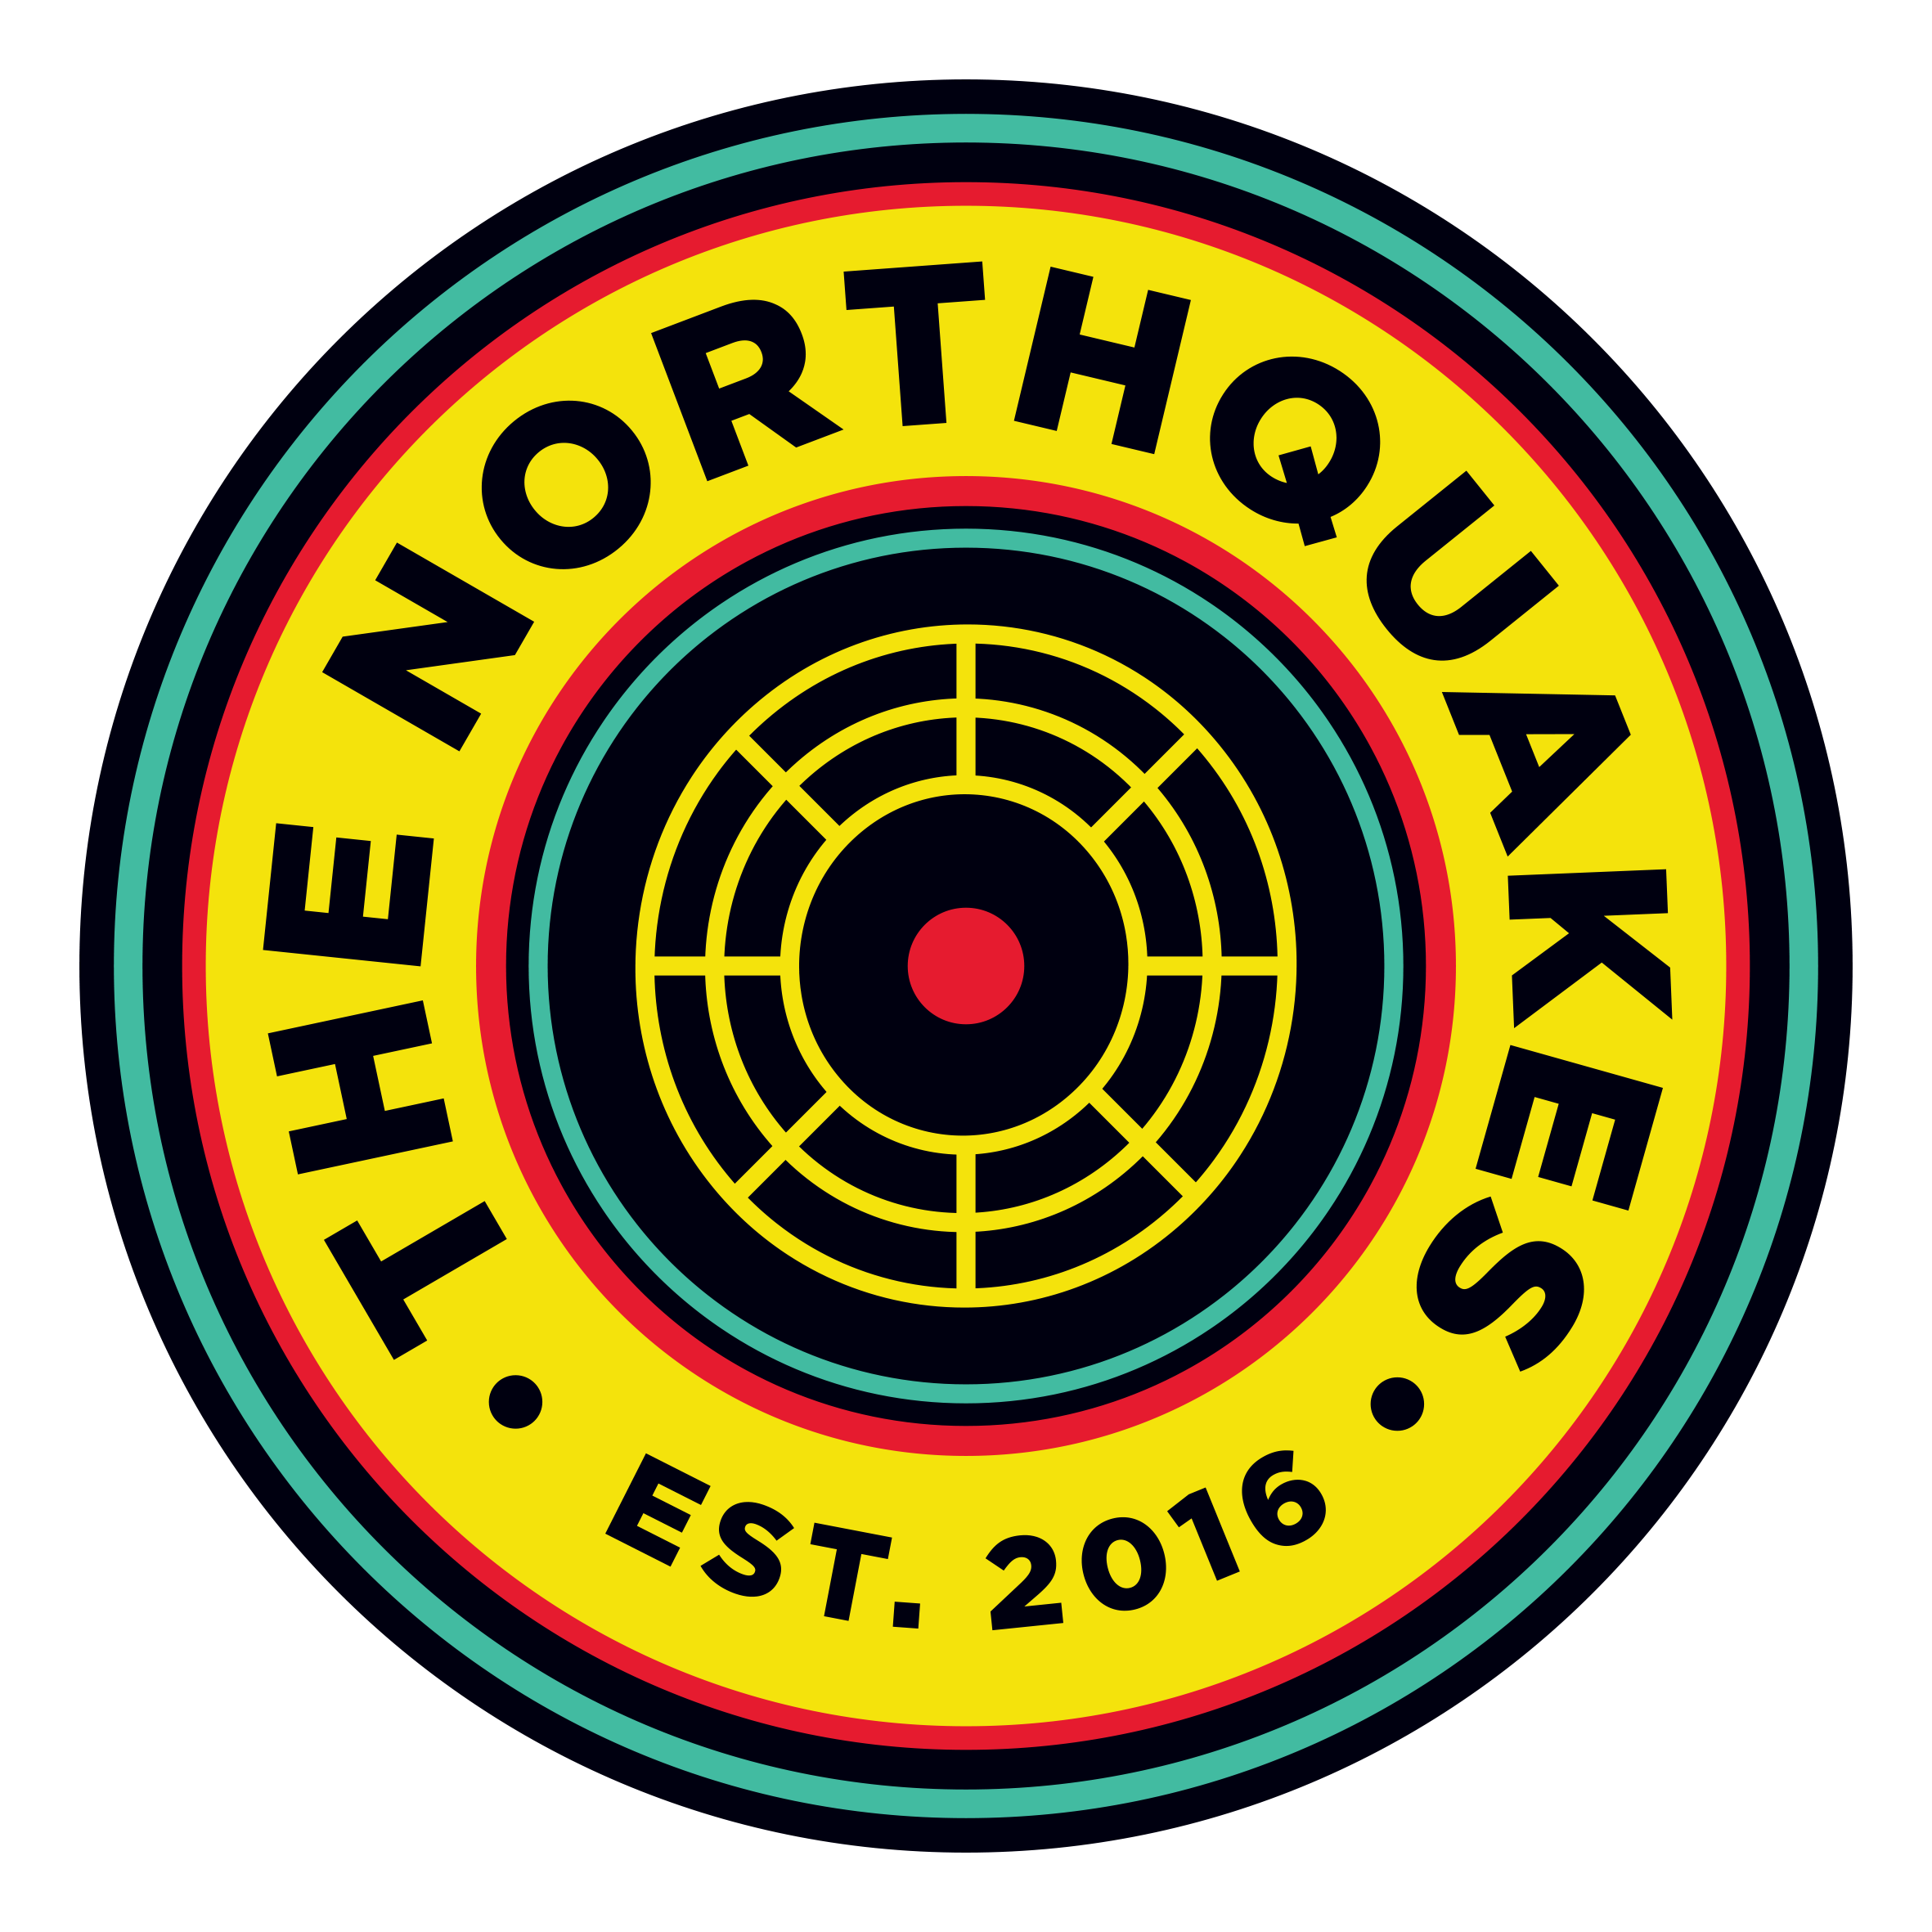 Northquakes logo